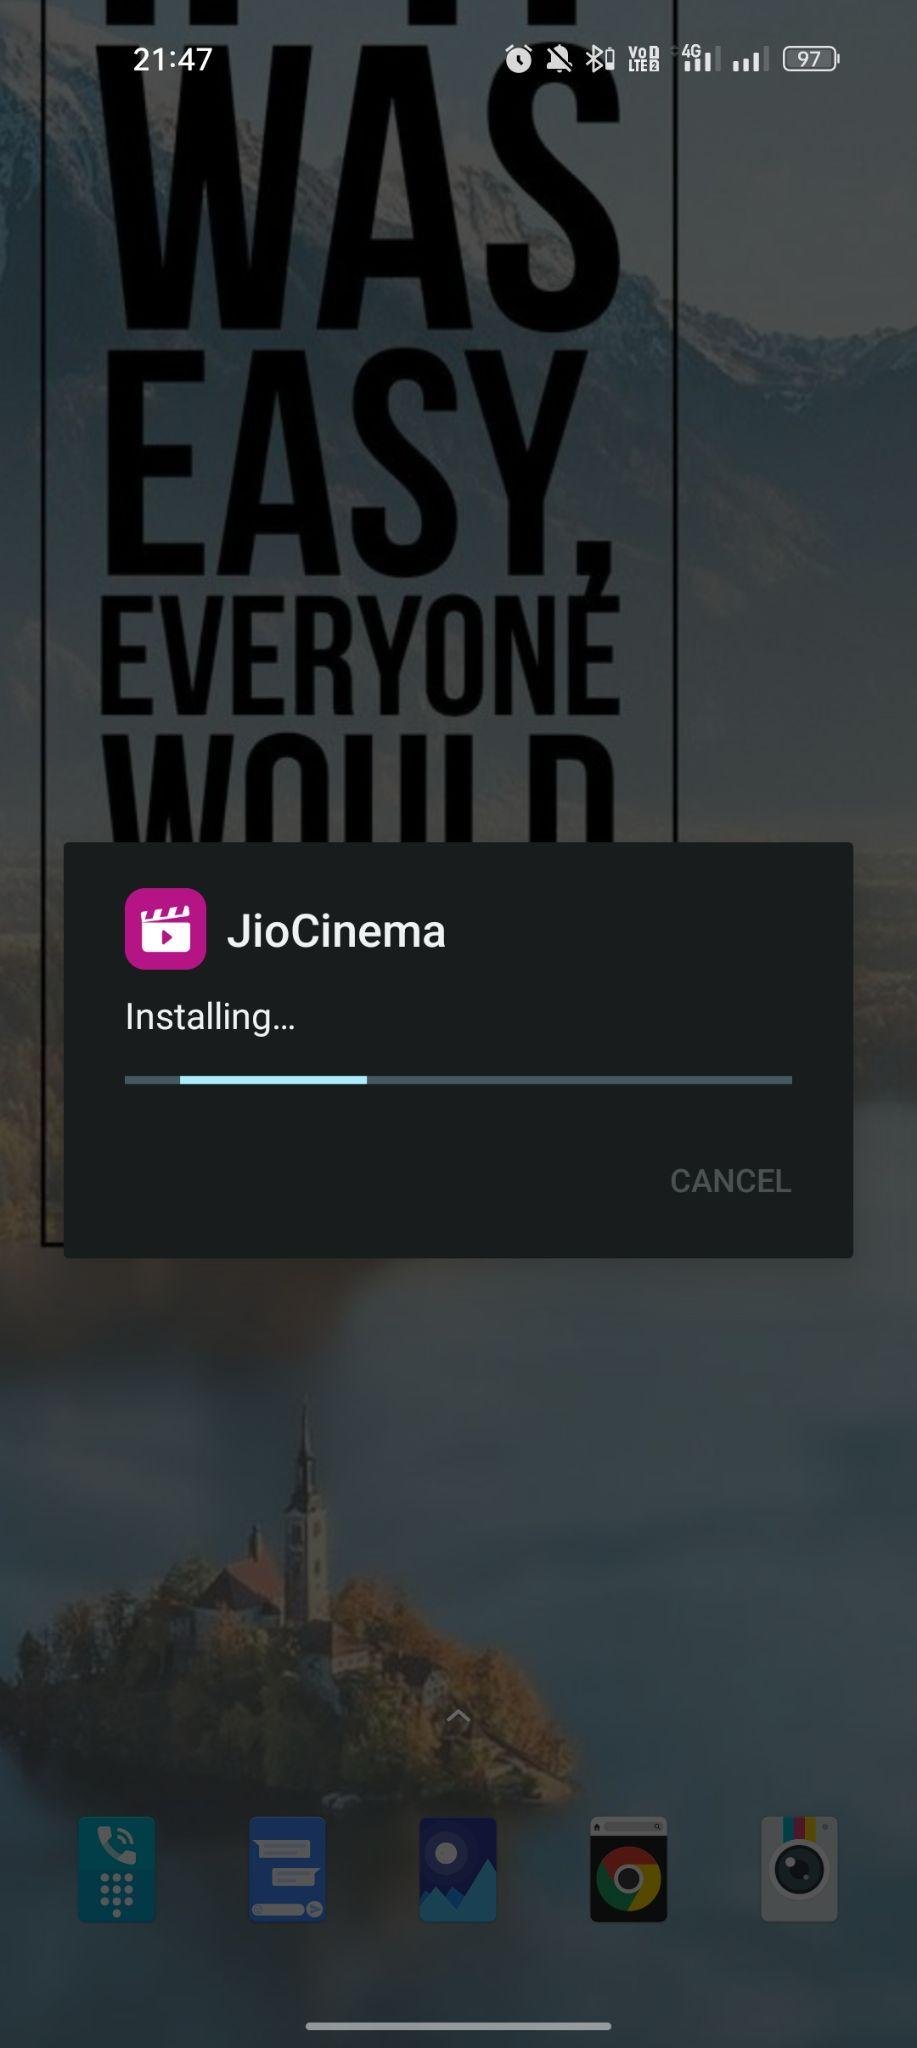 JioCinema apk installing